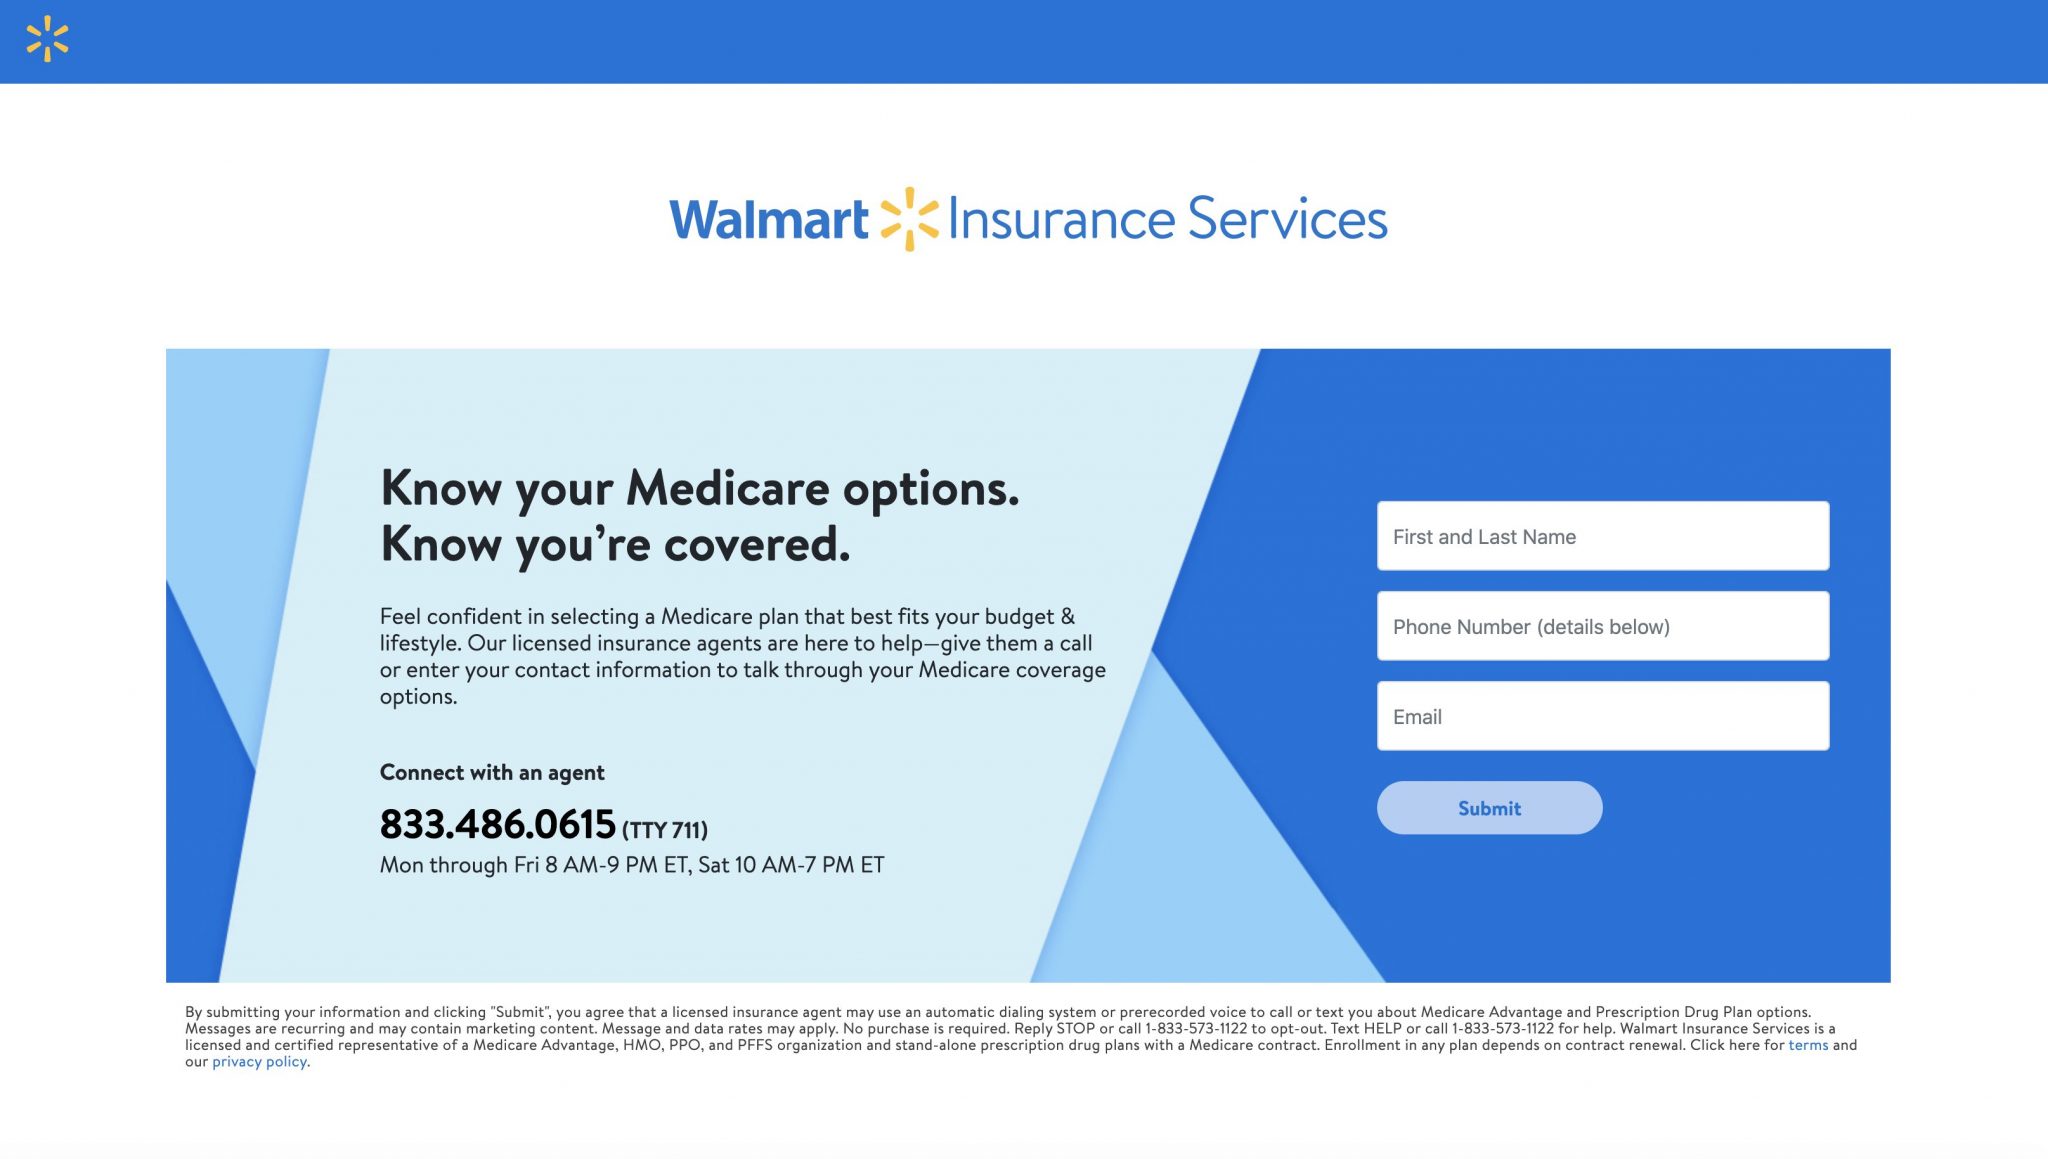 Walmart launches health insurance plans